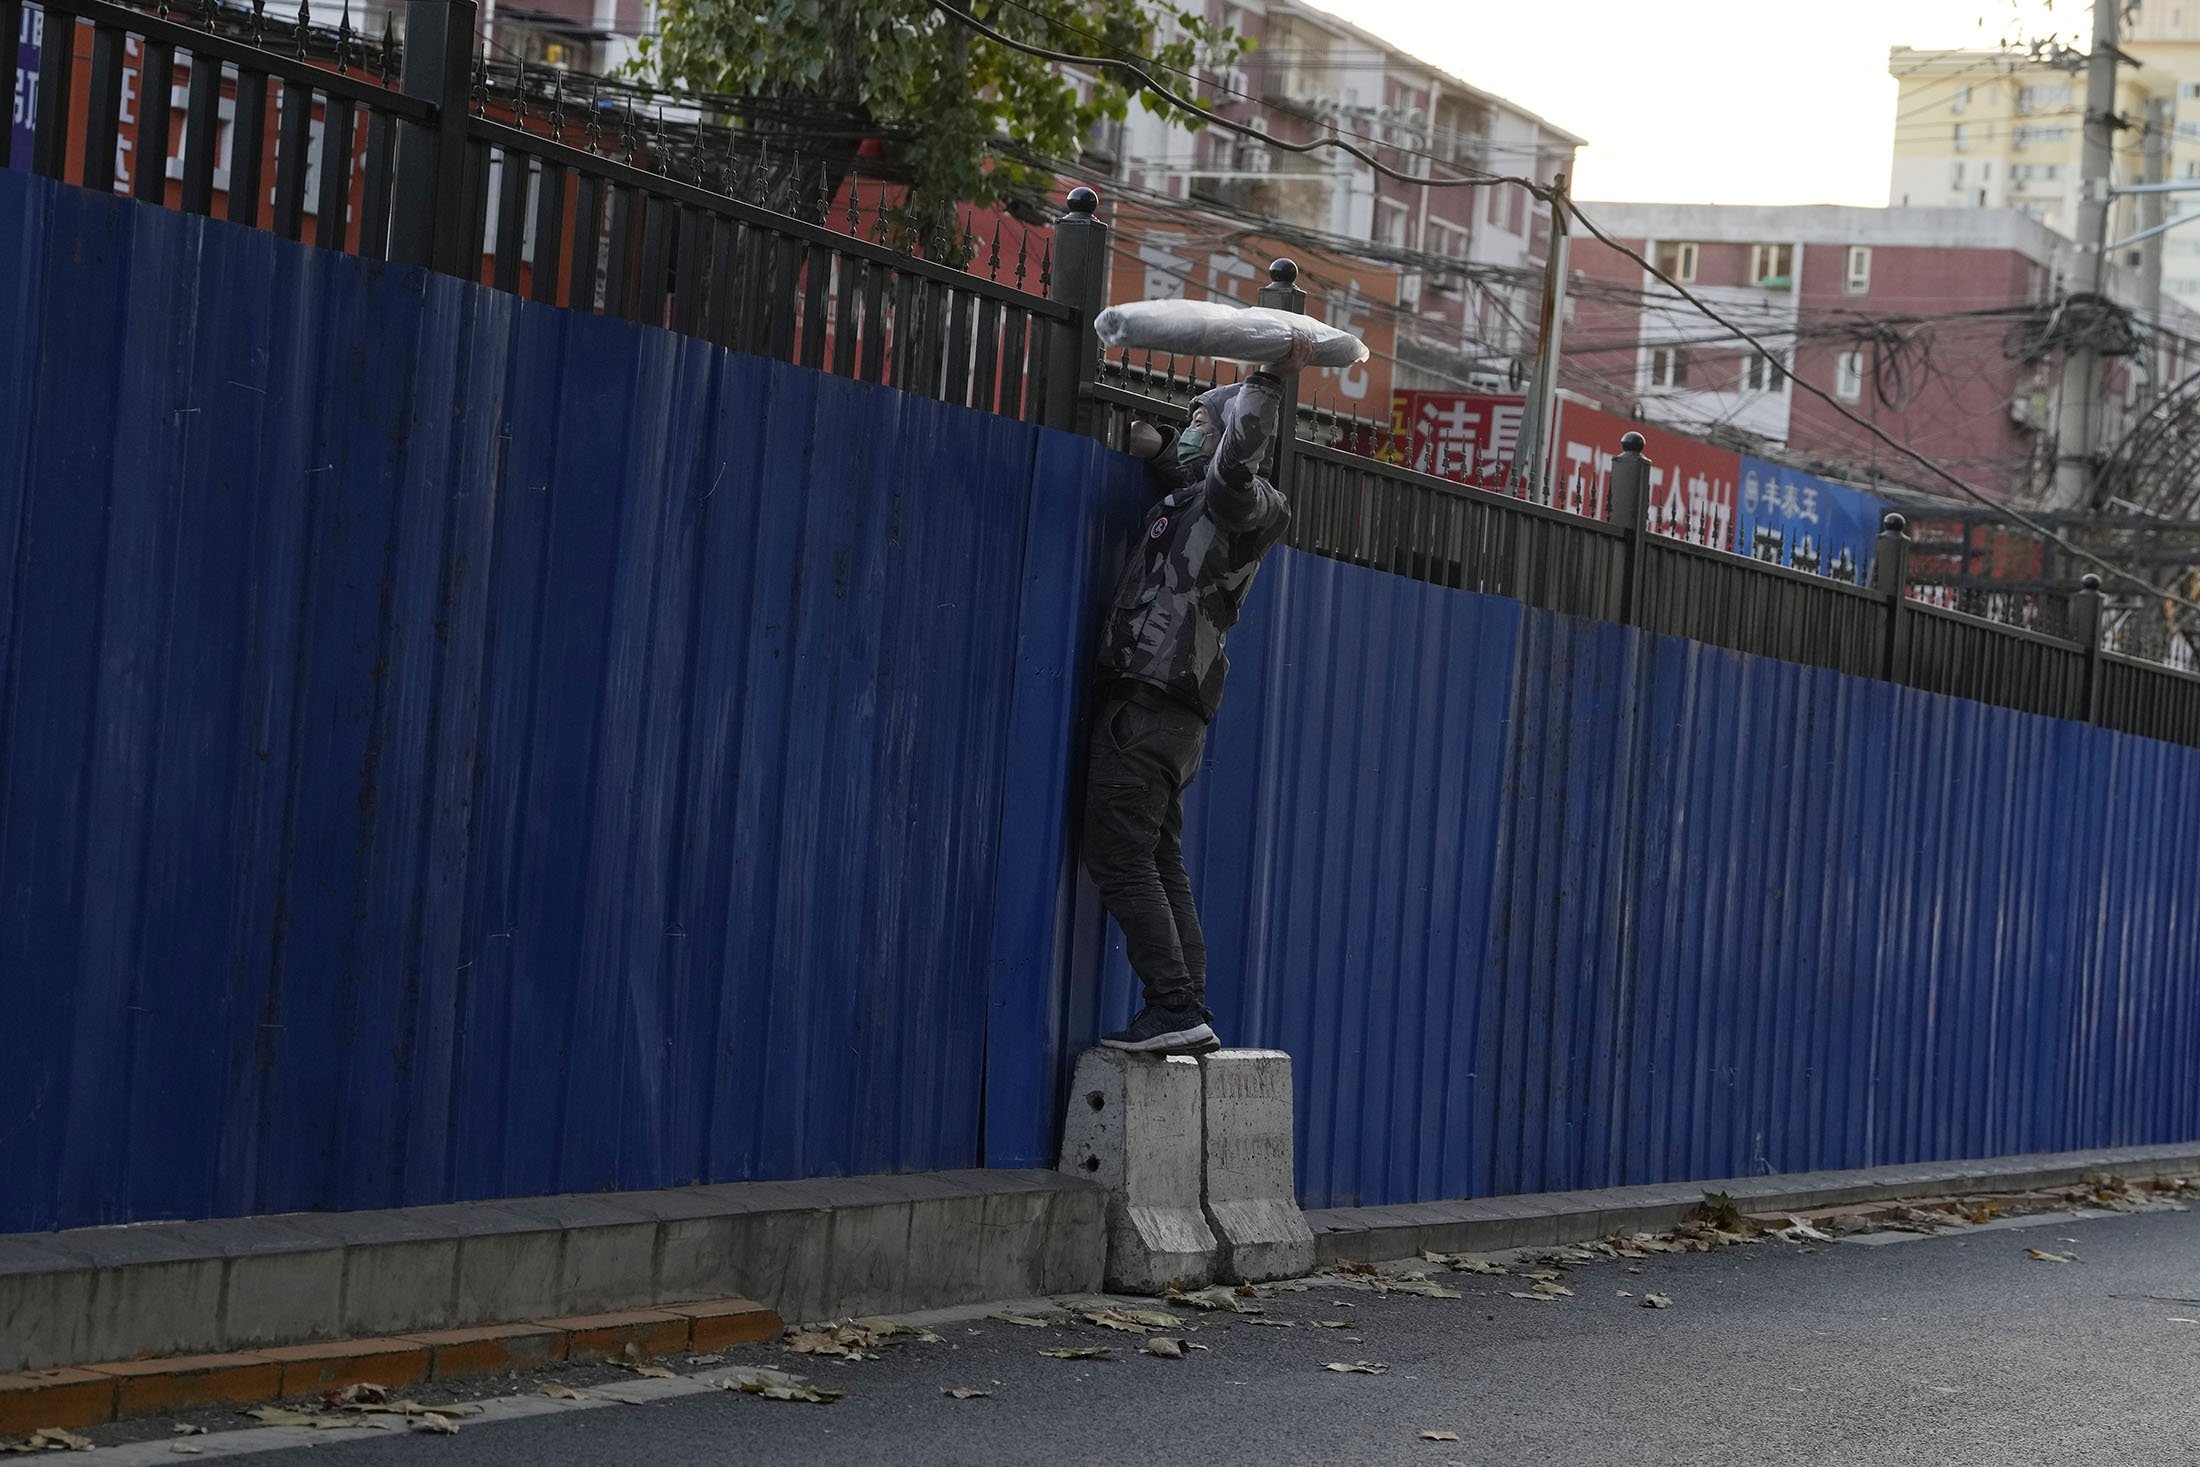 A man retrieves an item through the fences around a community under lockdown in Beijing, China, Nov. 26, 2022. (AP Photo)